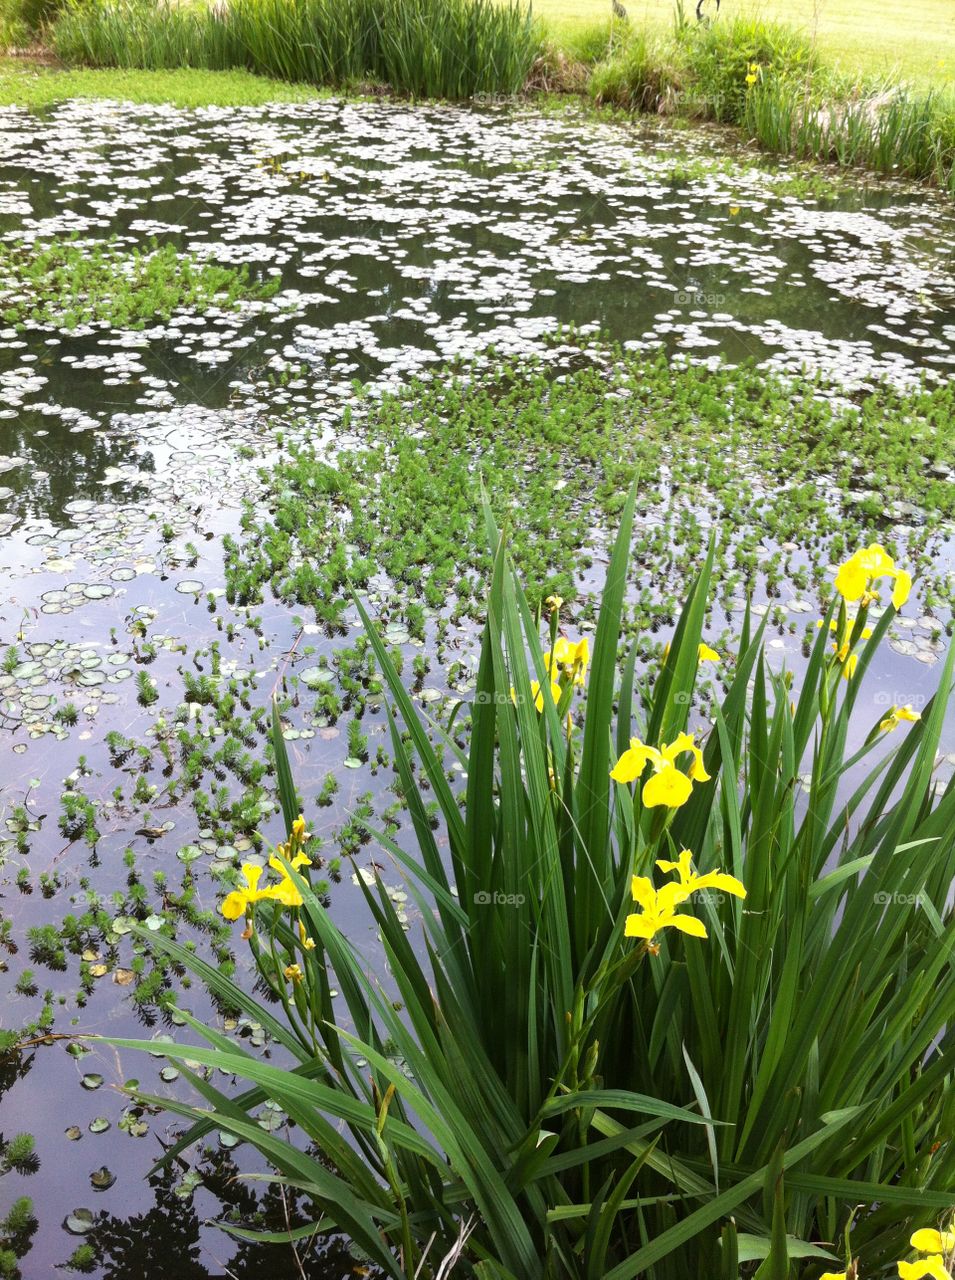 Flowers in Bloom. Daffodils in bloom